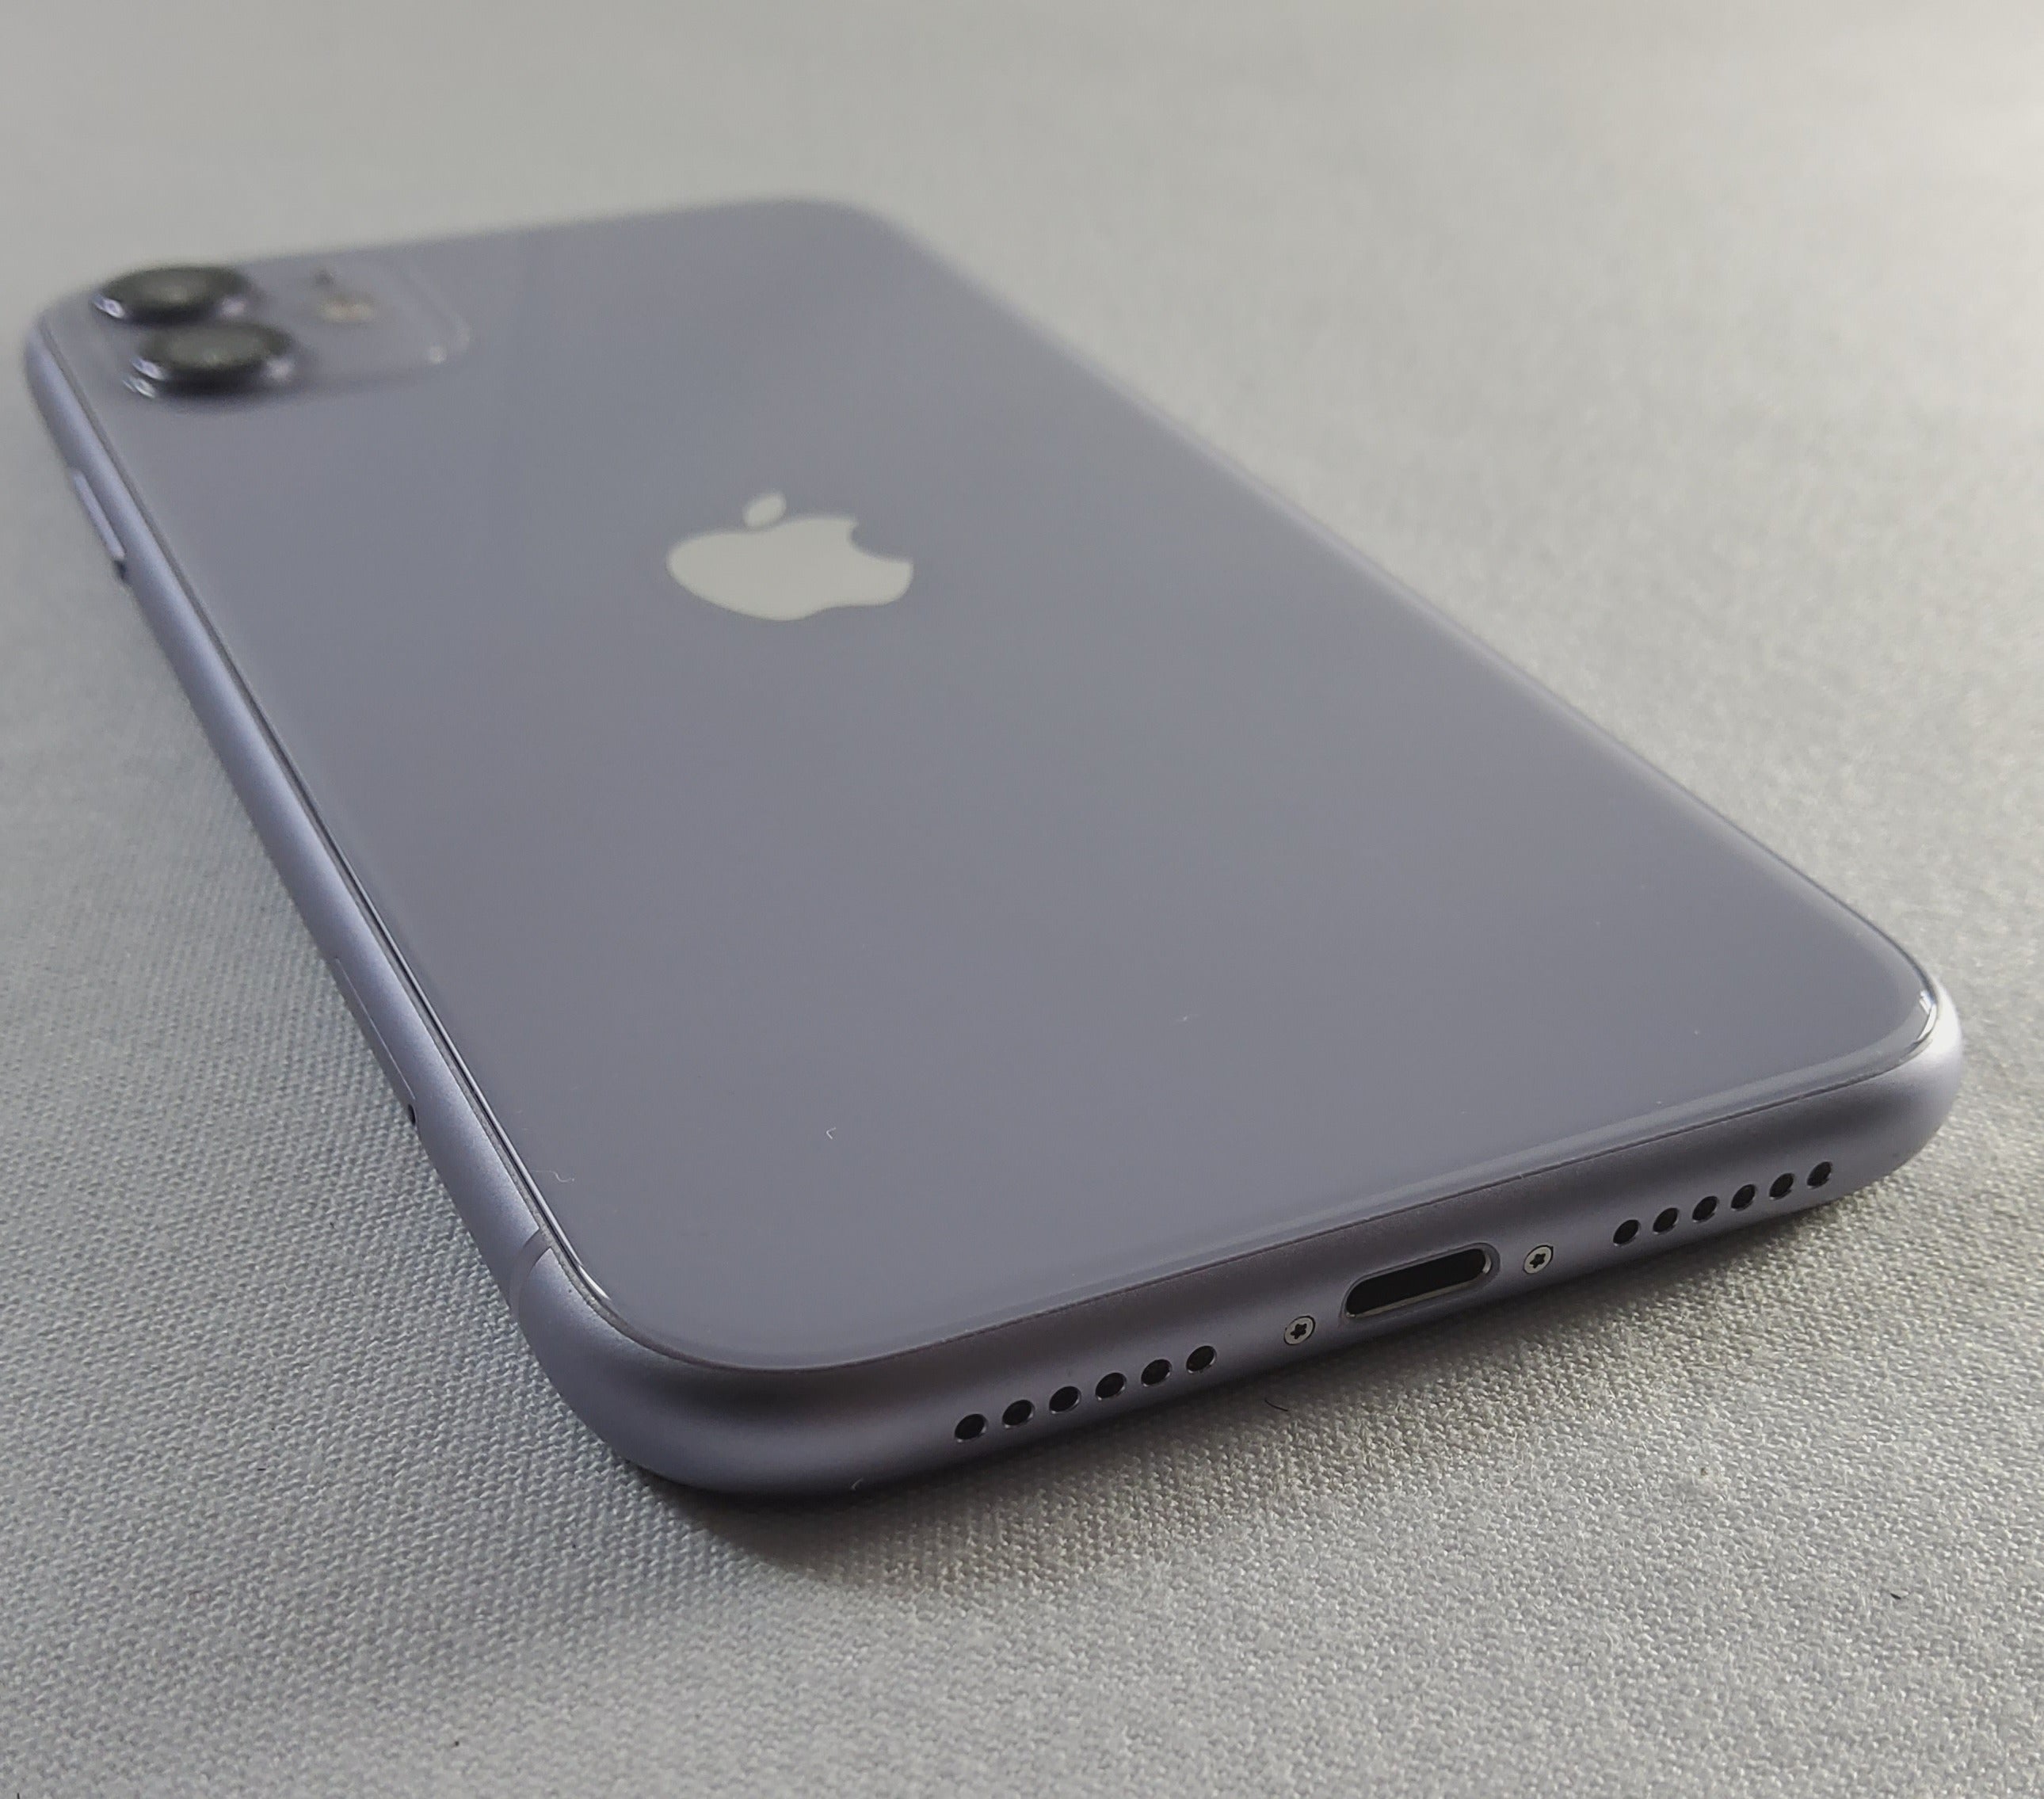 Apple iPhone 11 (64GB) Smartphone - Black - Unlocked